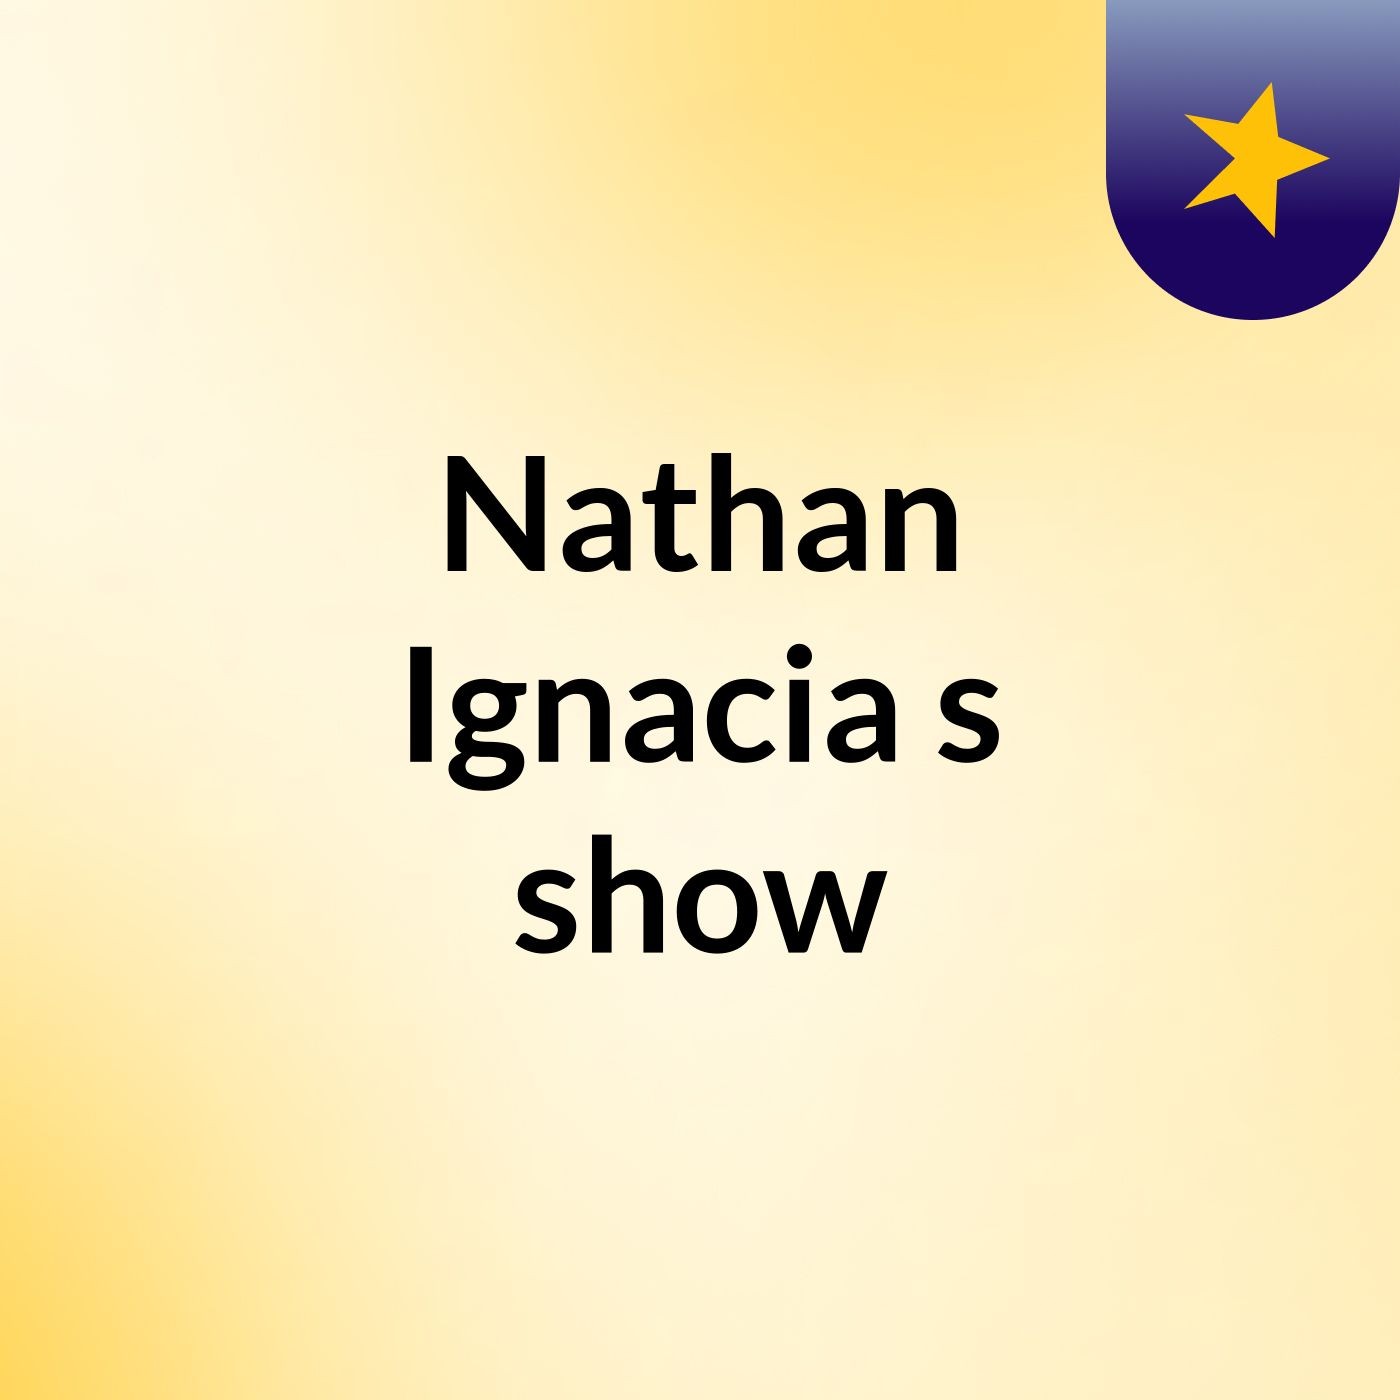 Nathan Ignacia's show